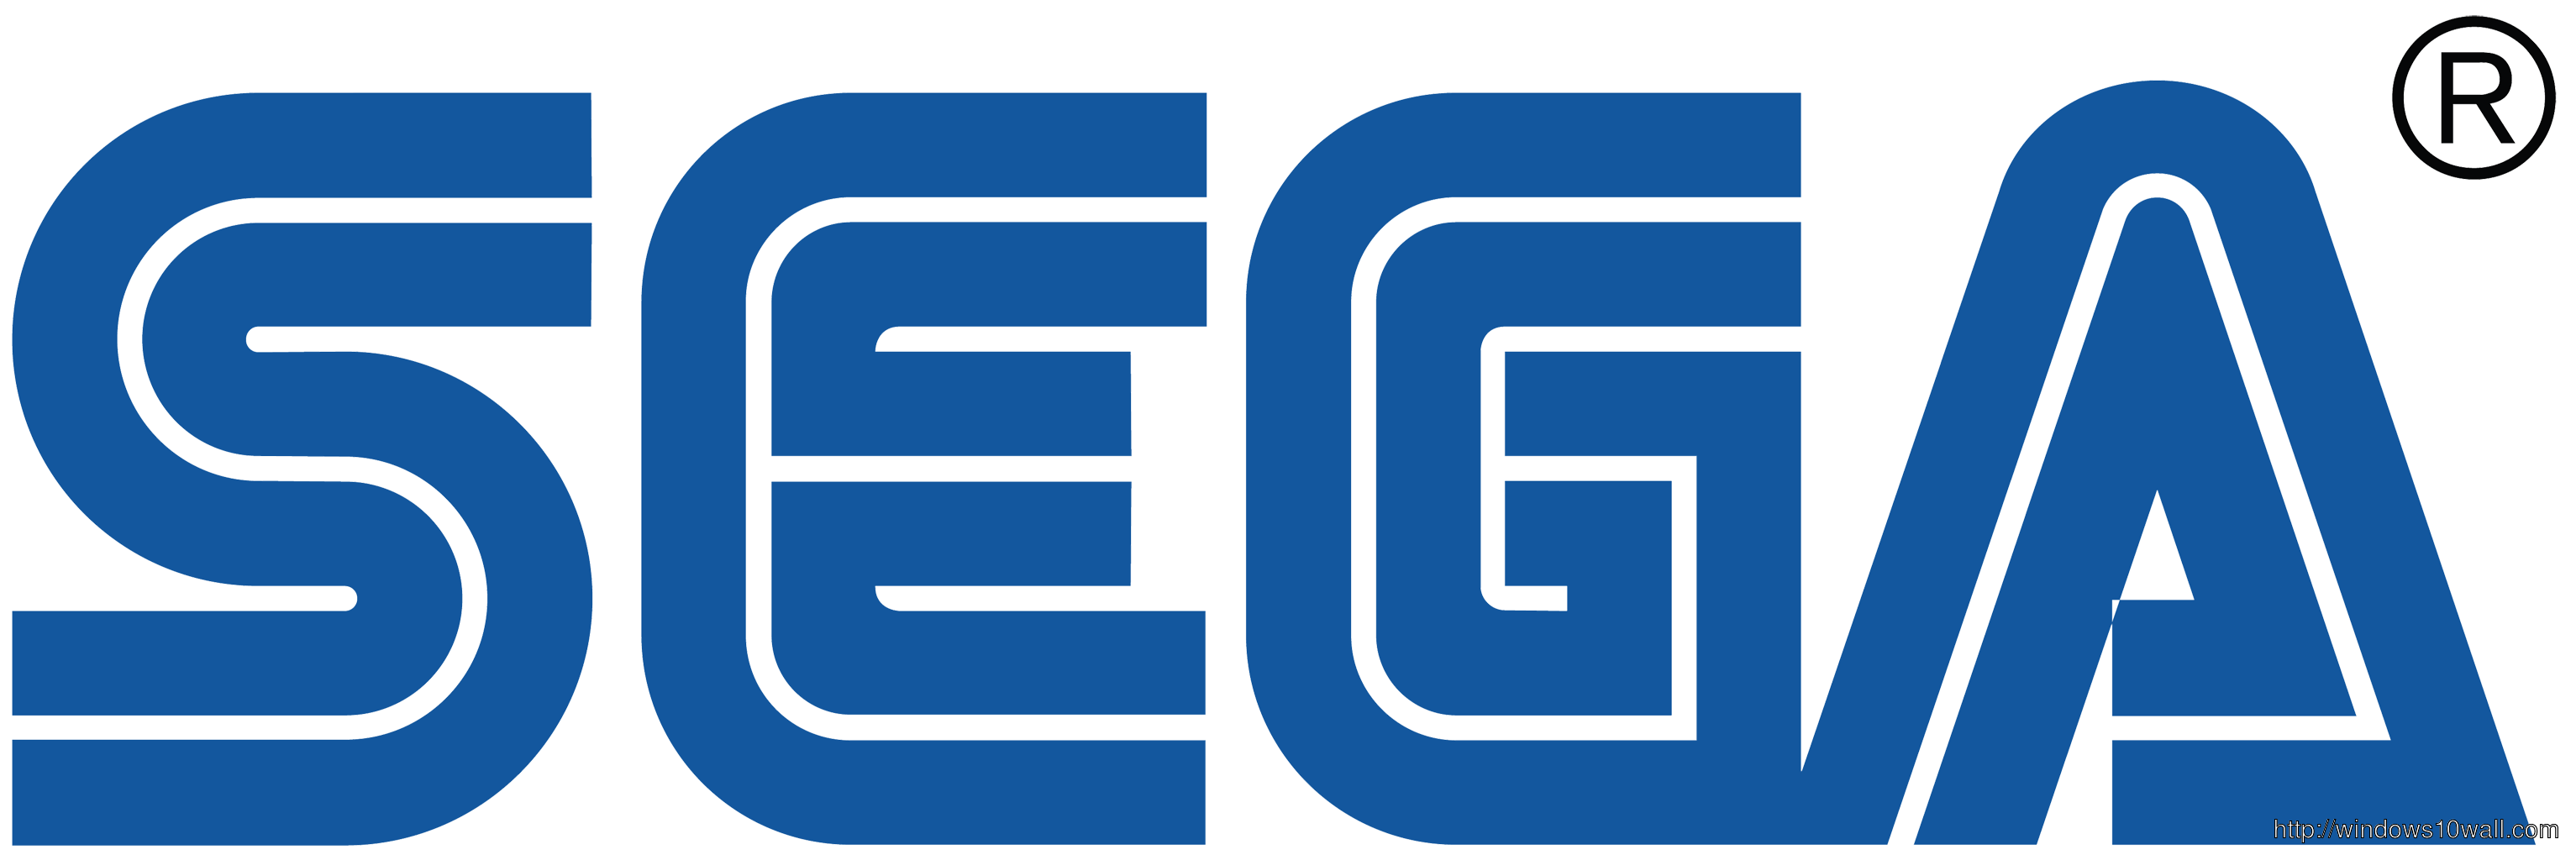 SEGA logo Background Wallpaper